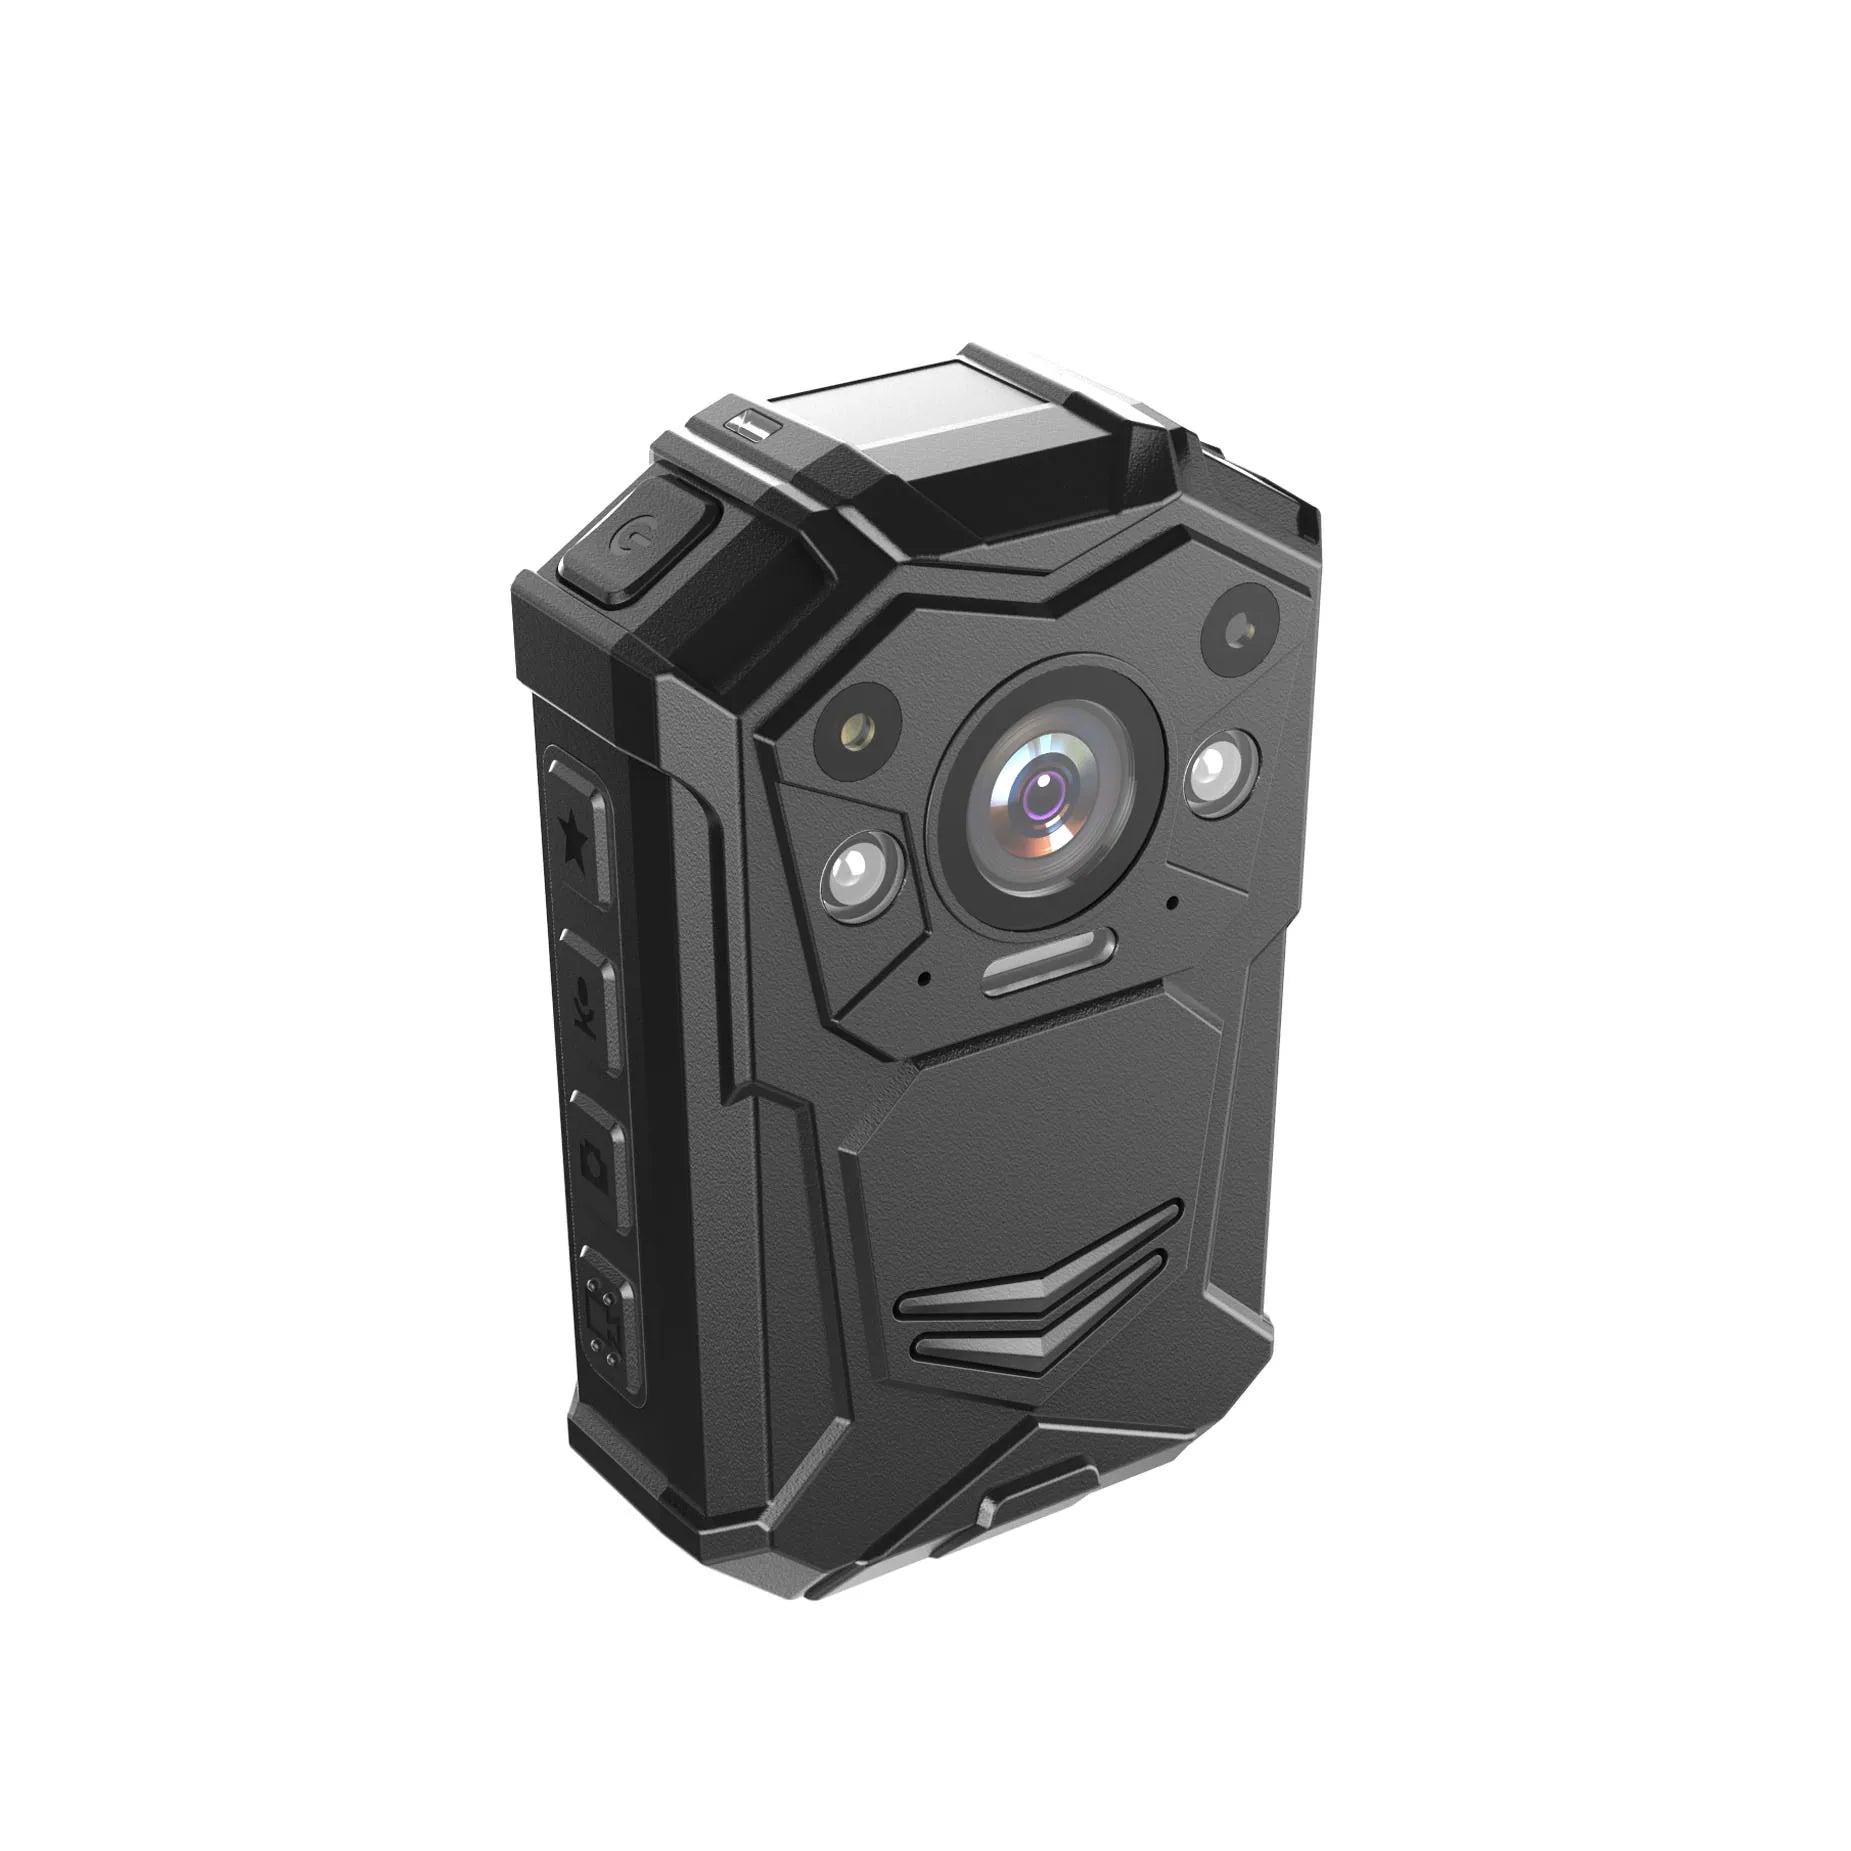 S21 GPS Police Enforecment Body Video Camera IR Night Vision H.265 HD 1440P Anti-drop Waterproof 2.0 inch LCD Screen